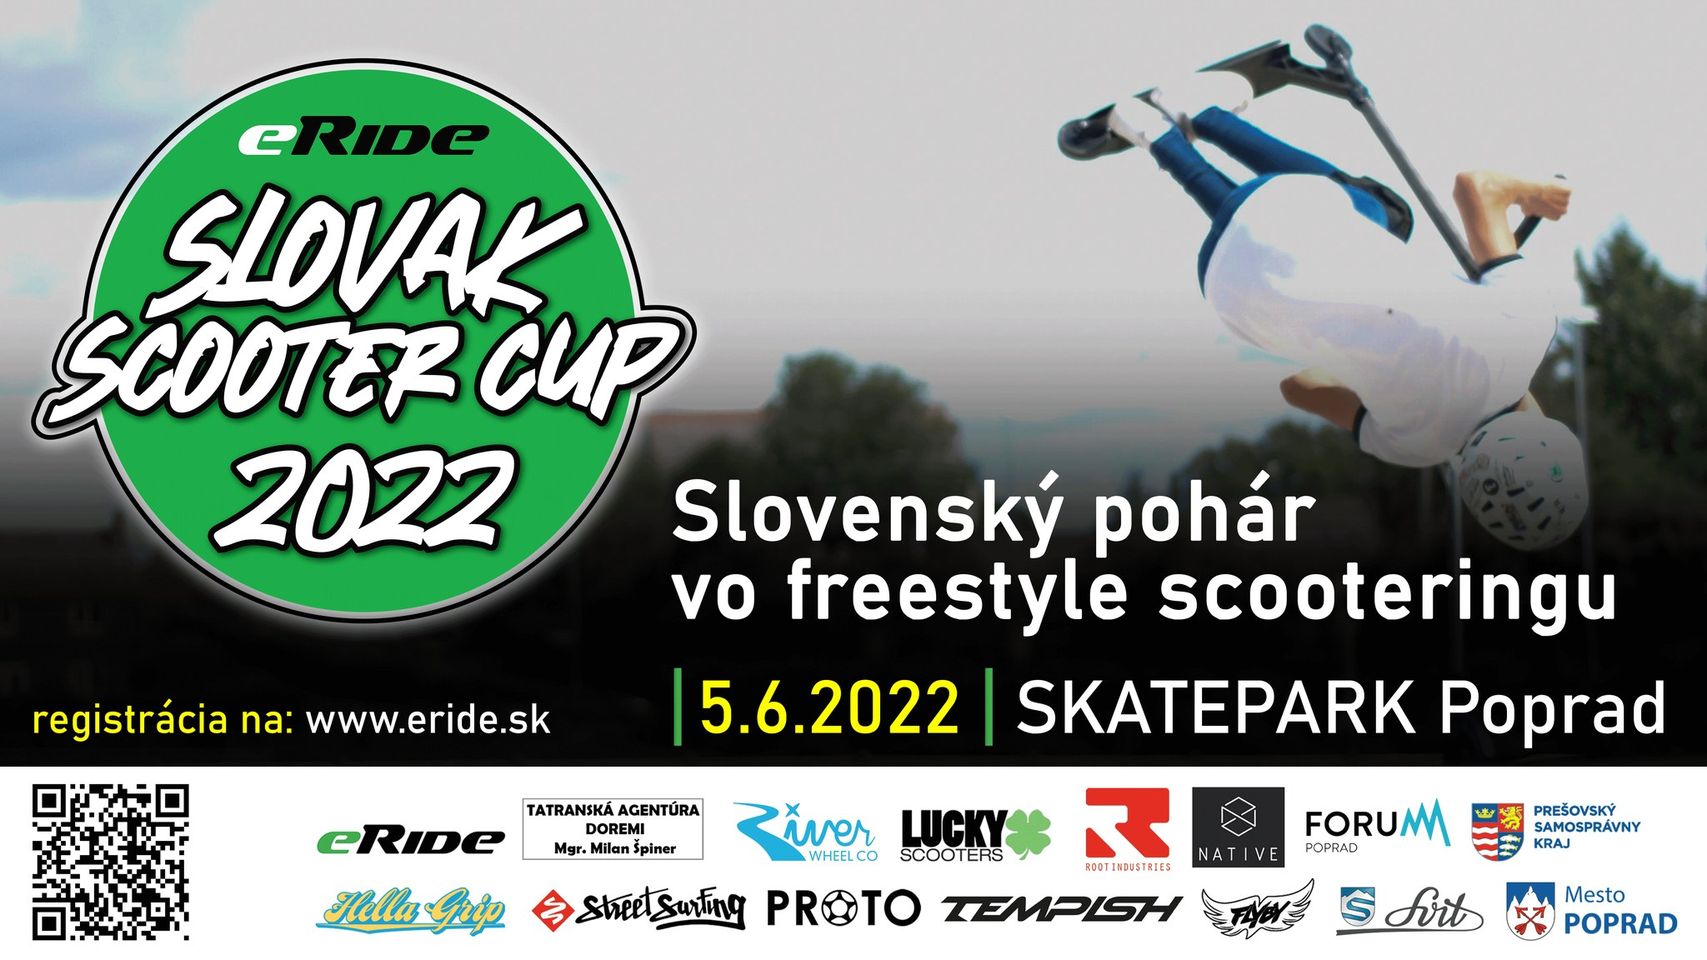 eRide Slovak Scooter Cup 2022 Poprad skatepark